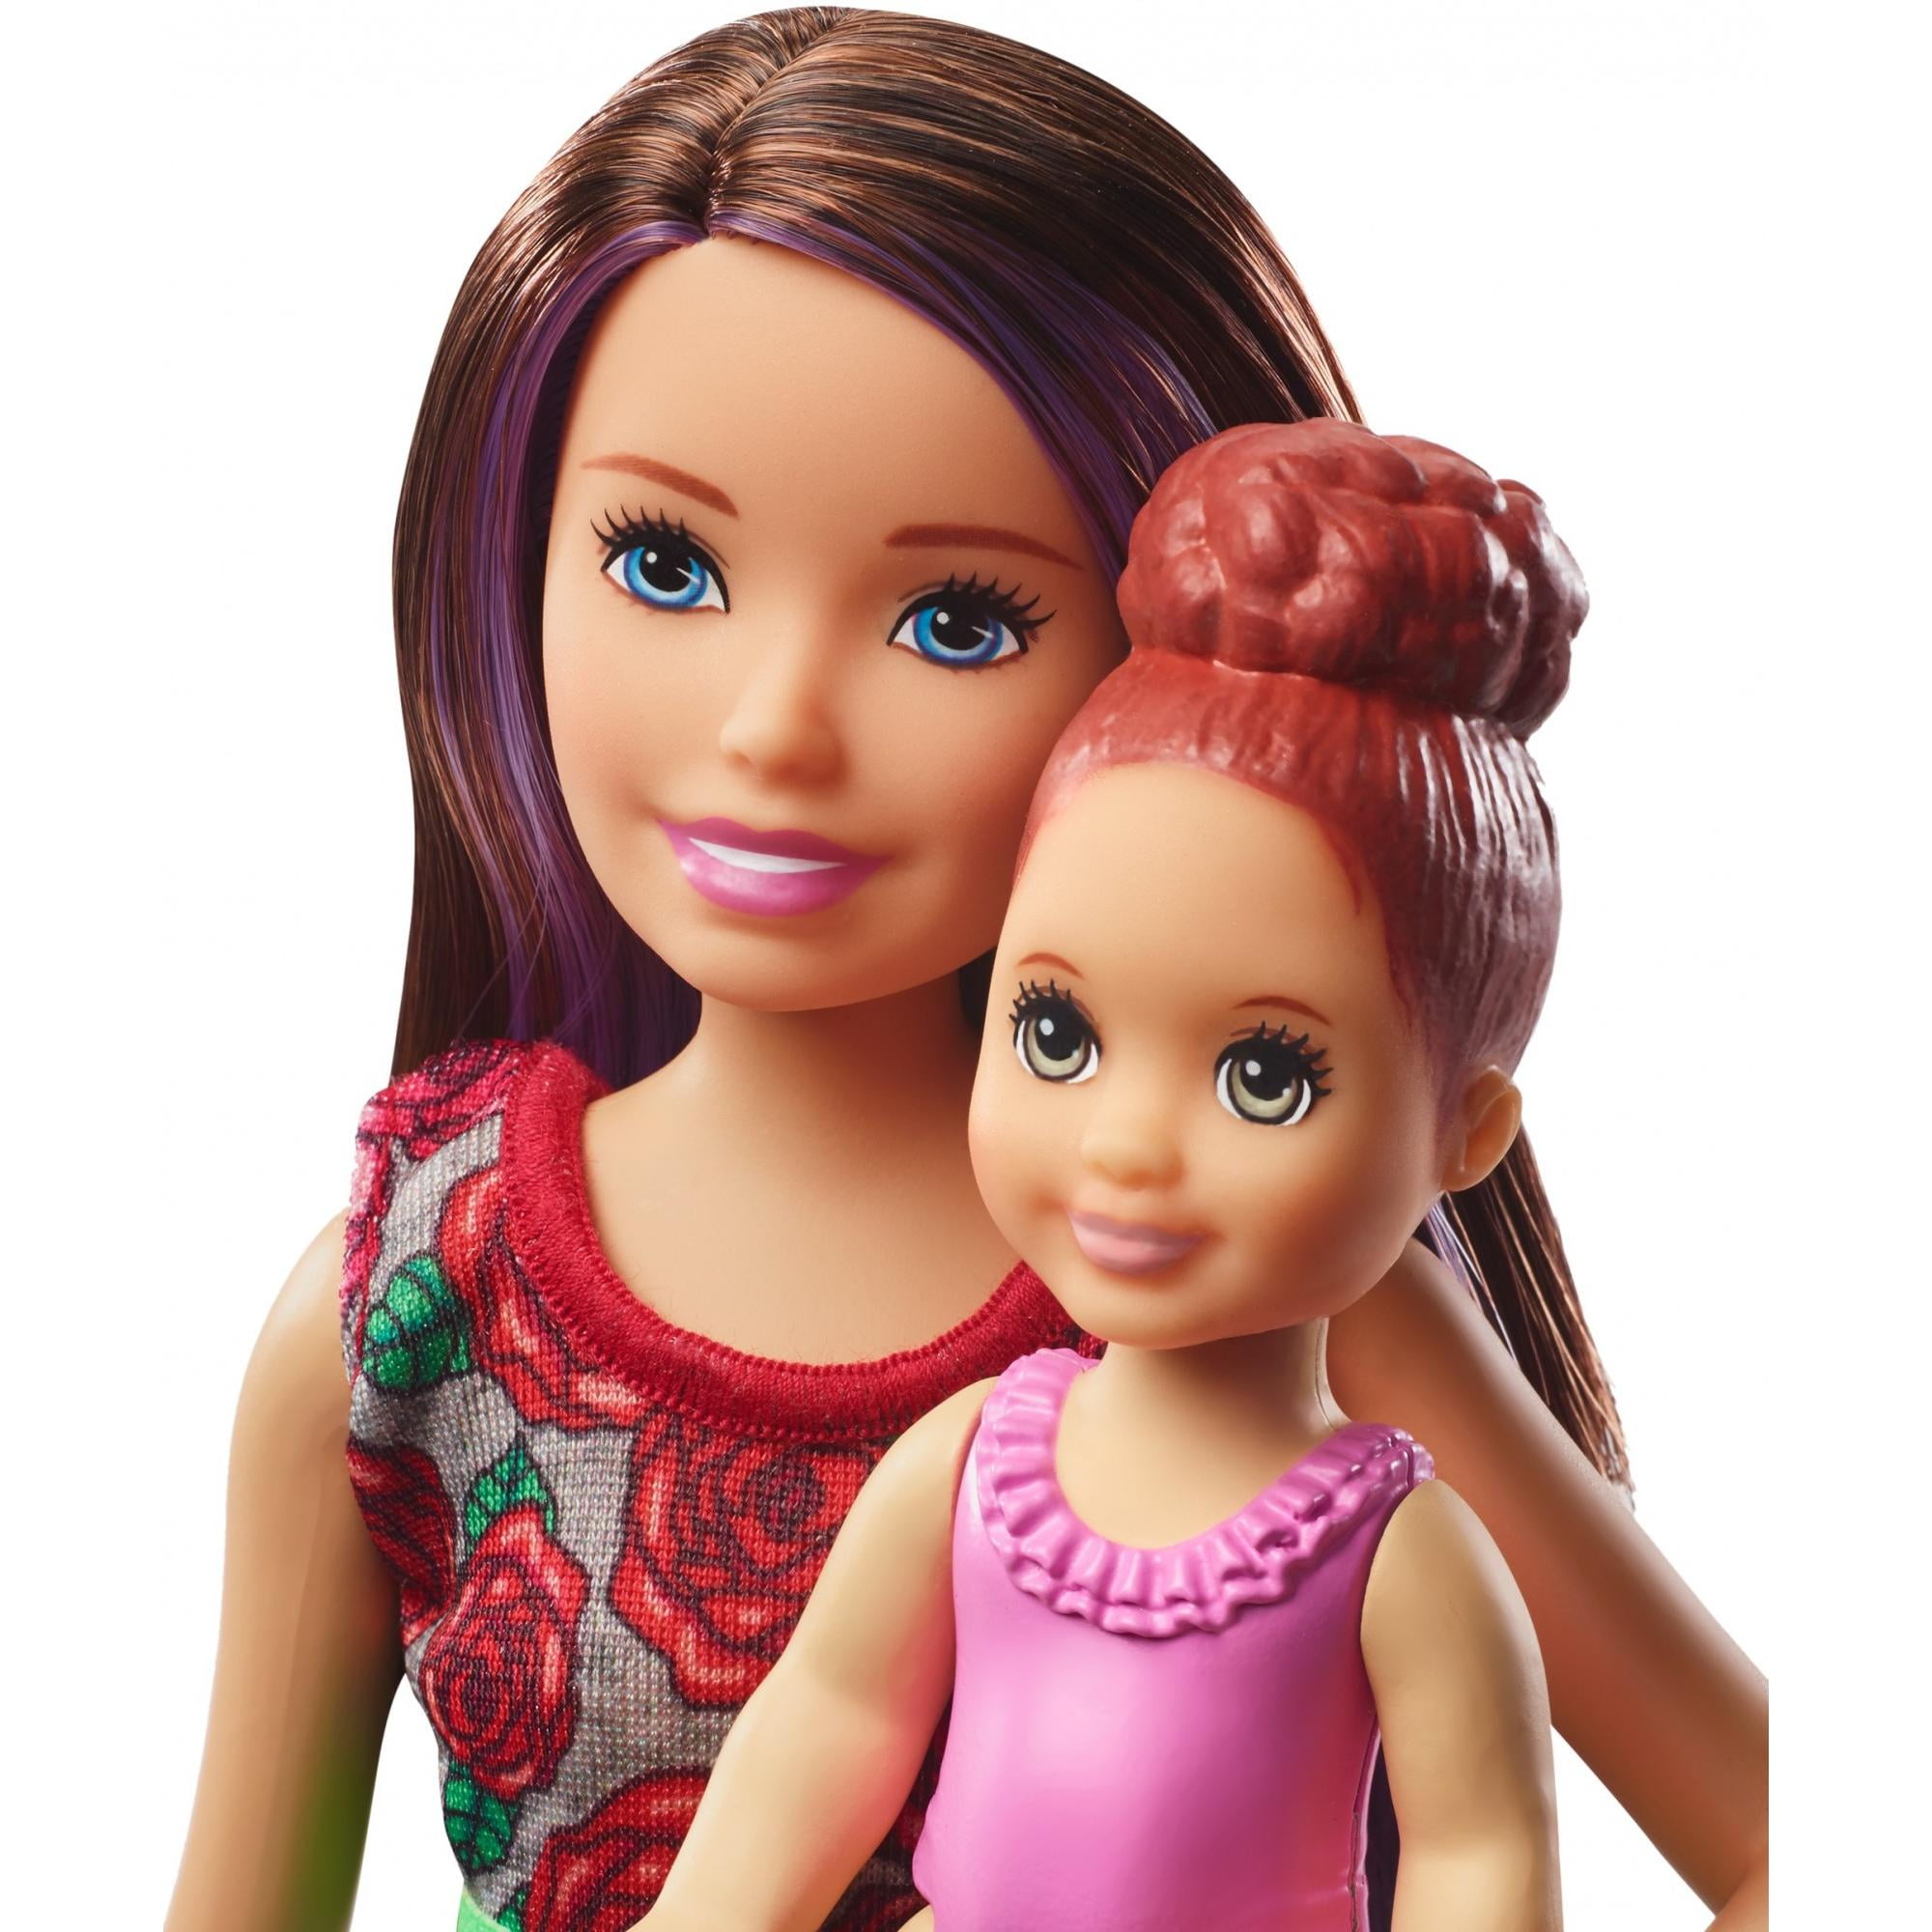 Купить игрушку сестре. Кукла Барби Скиппер. Кукла Барби няня Скиппер. Кукла Барби Скиппер няня 2. Набор Barbie няня, fhy99.